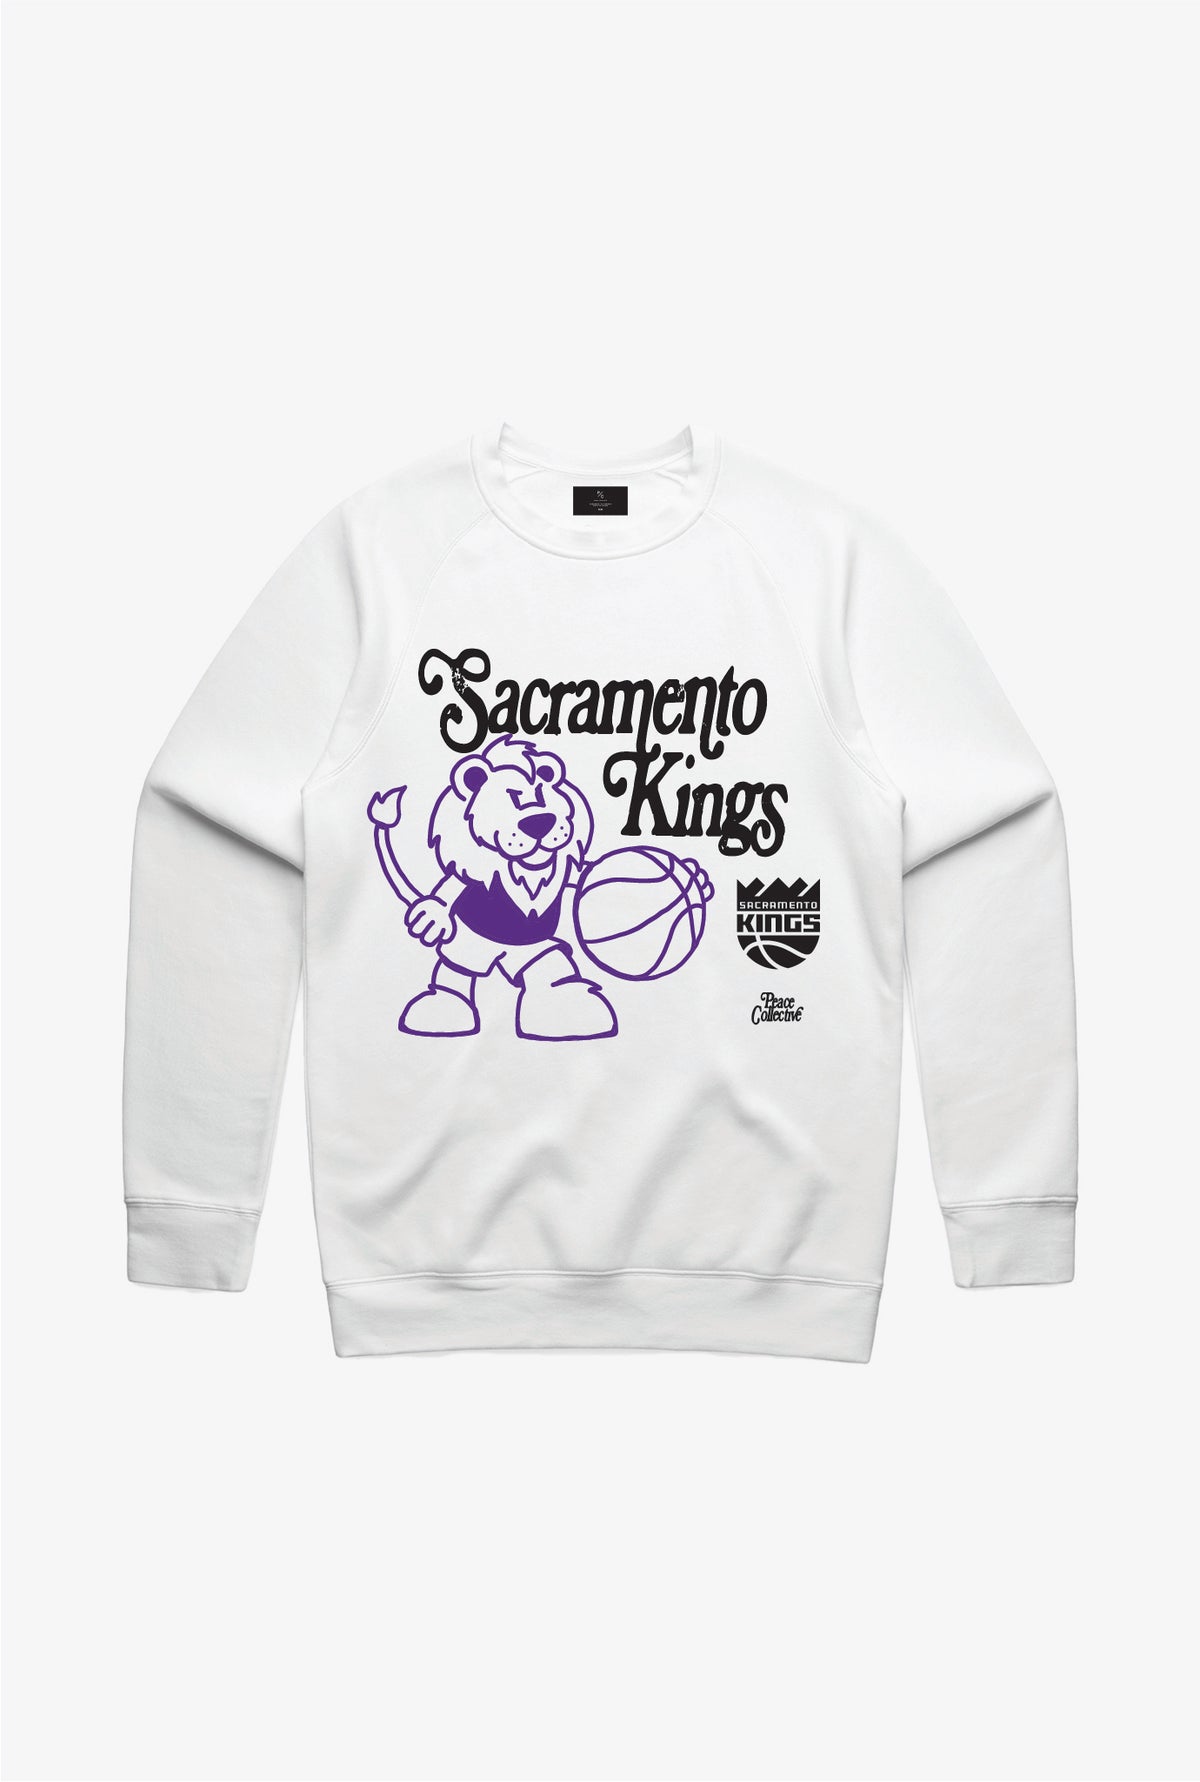 Sacramento Kings Mascot Crewneck - White